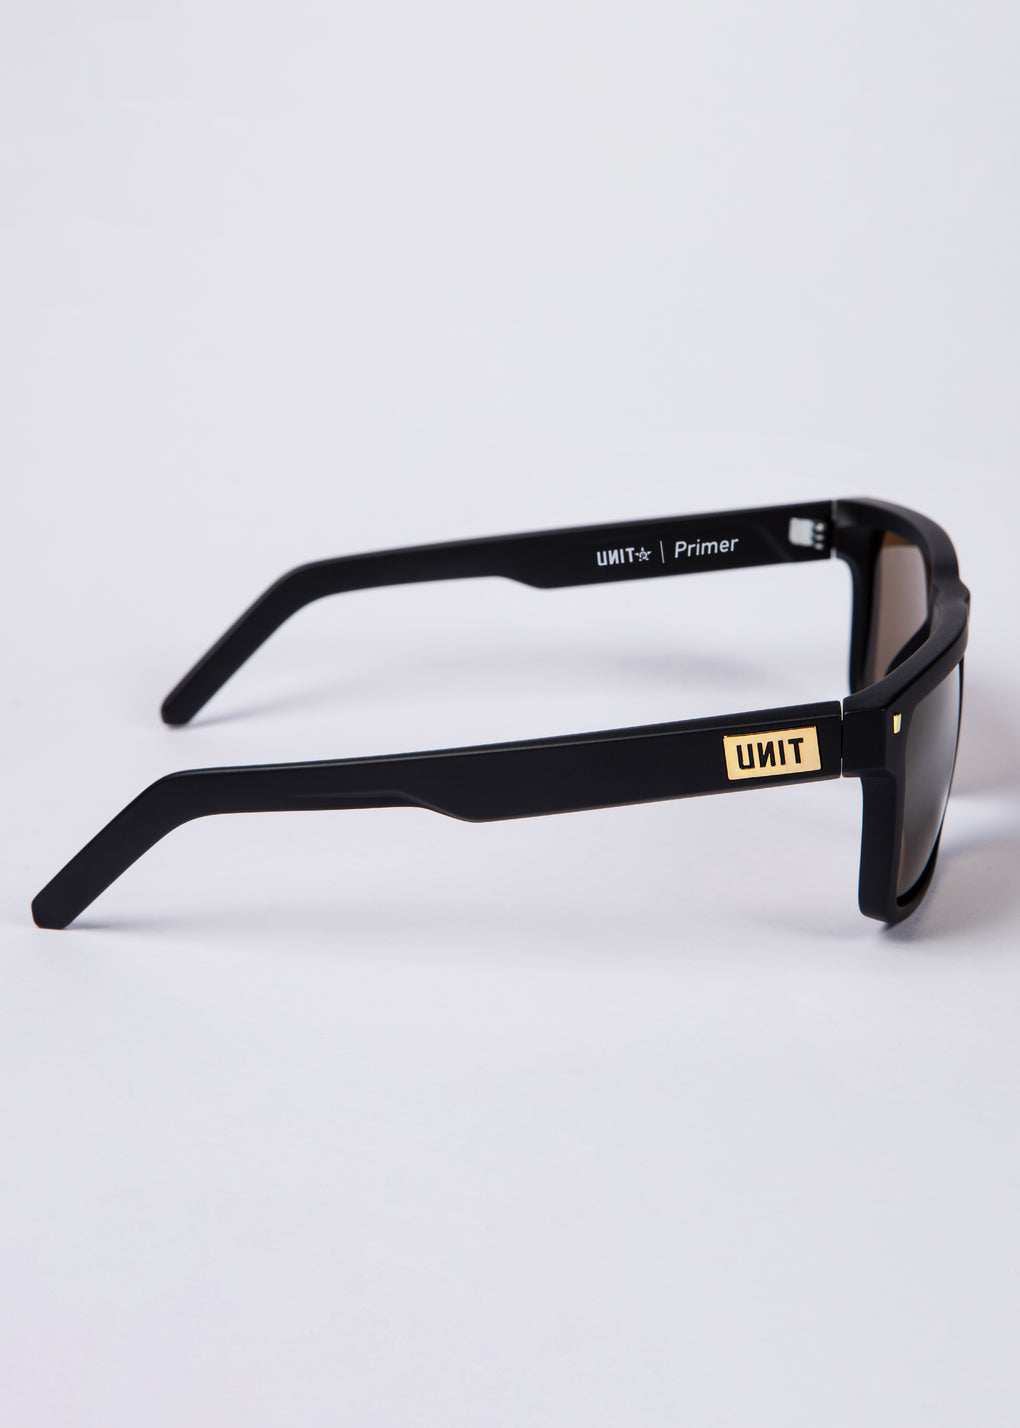 UNIT Primer Sunglasses - Matte Black Gold Polarised